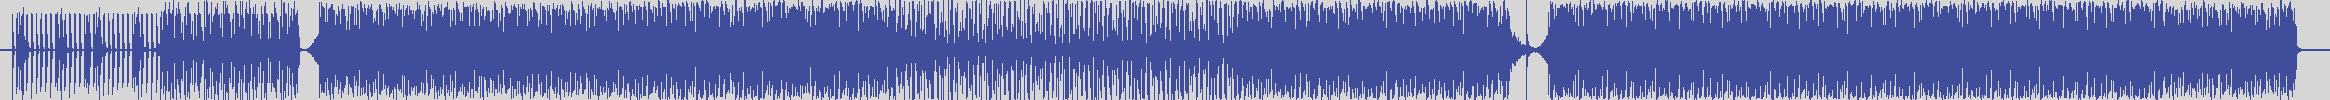 nf_boyz_records [NFY004] Crashing Wood - Blue Ecstasy [Kombination Dee's House Mix] audio wave form